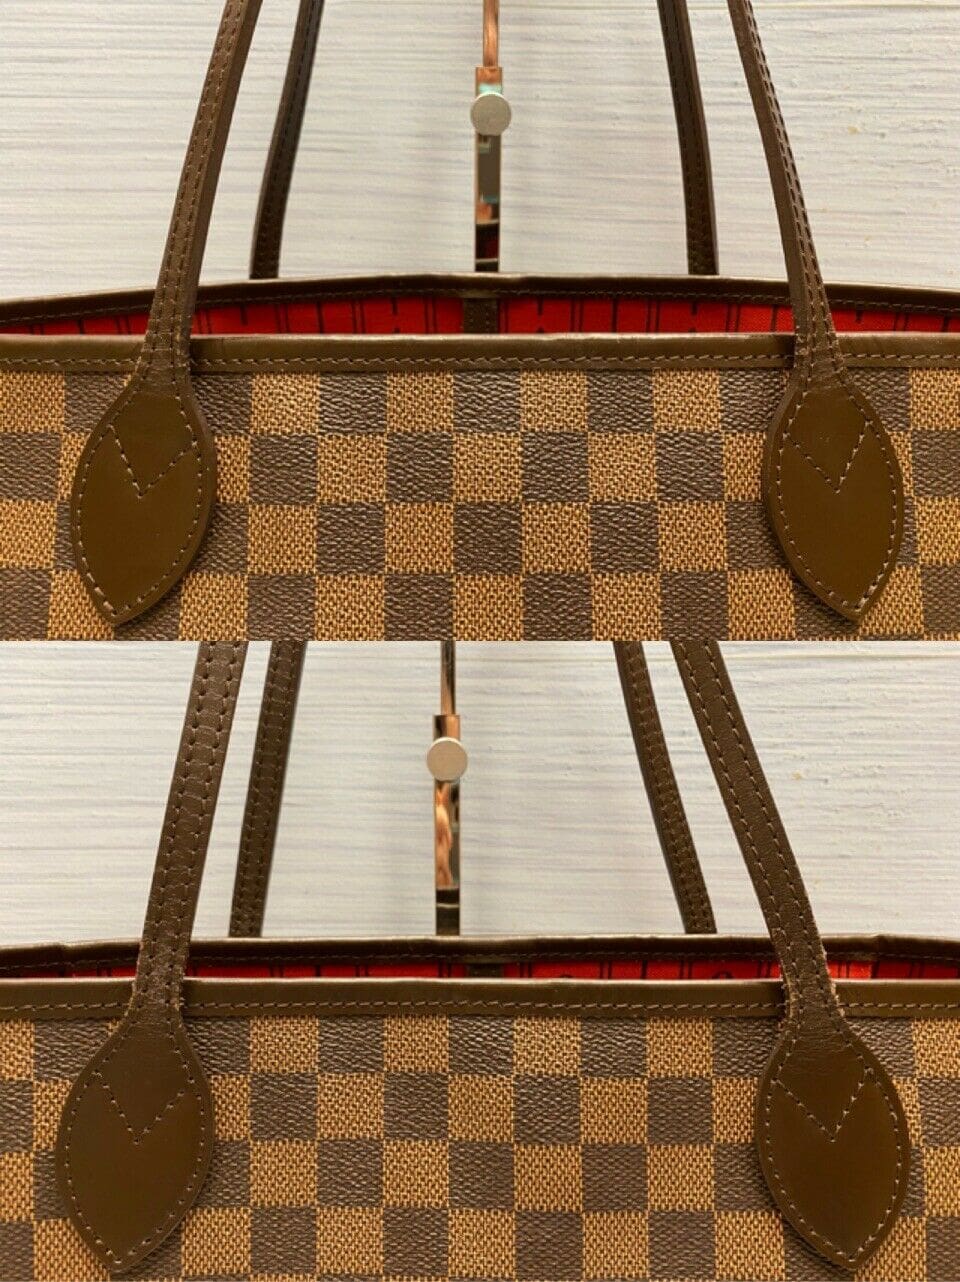 Louis Vuitton Artsy MM Monogram Shoulder Bag Tote Purse (GI4181) - Reetzy